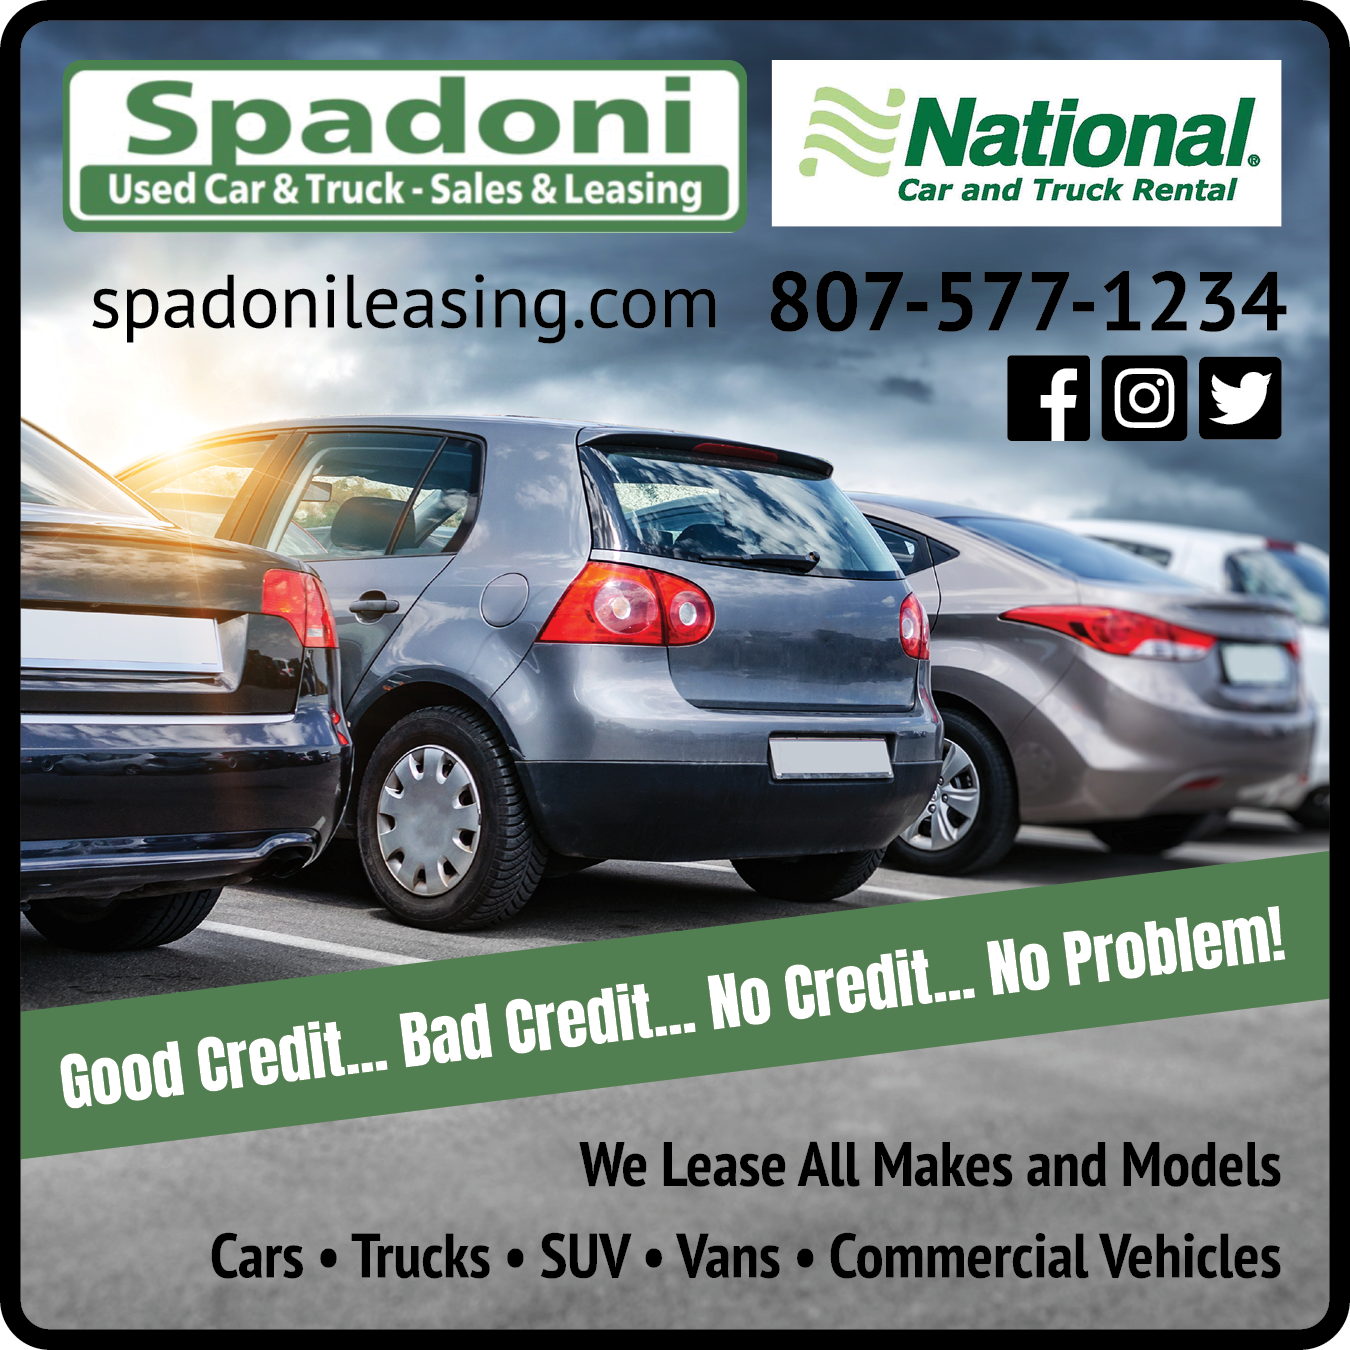 Spadoni Used Car & Truck, National Car & Truck Rental